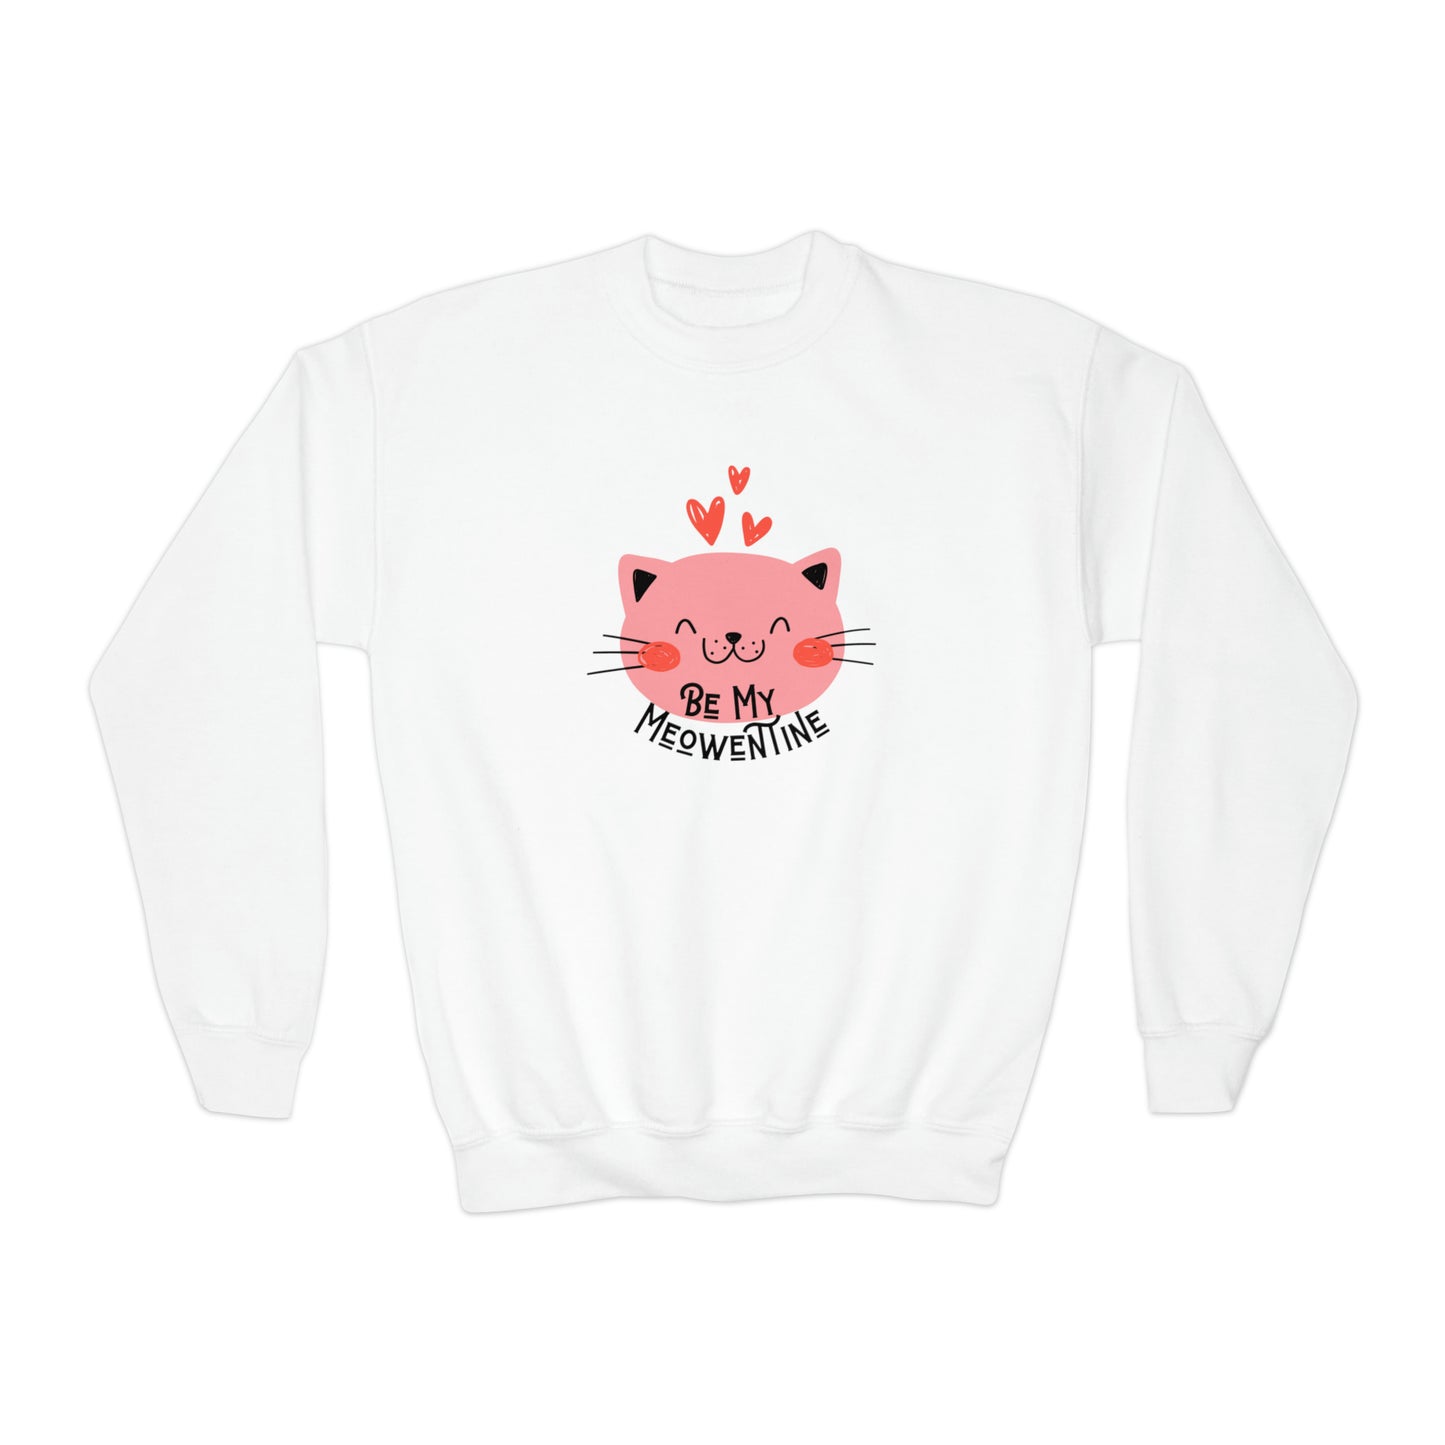 Be My Meowentine Youth Crewneck Sweatshirt, Children's Valentines Sweatshirt, Cat Valentine Sweatshirt